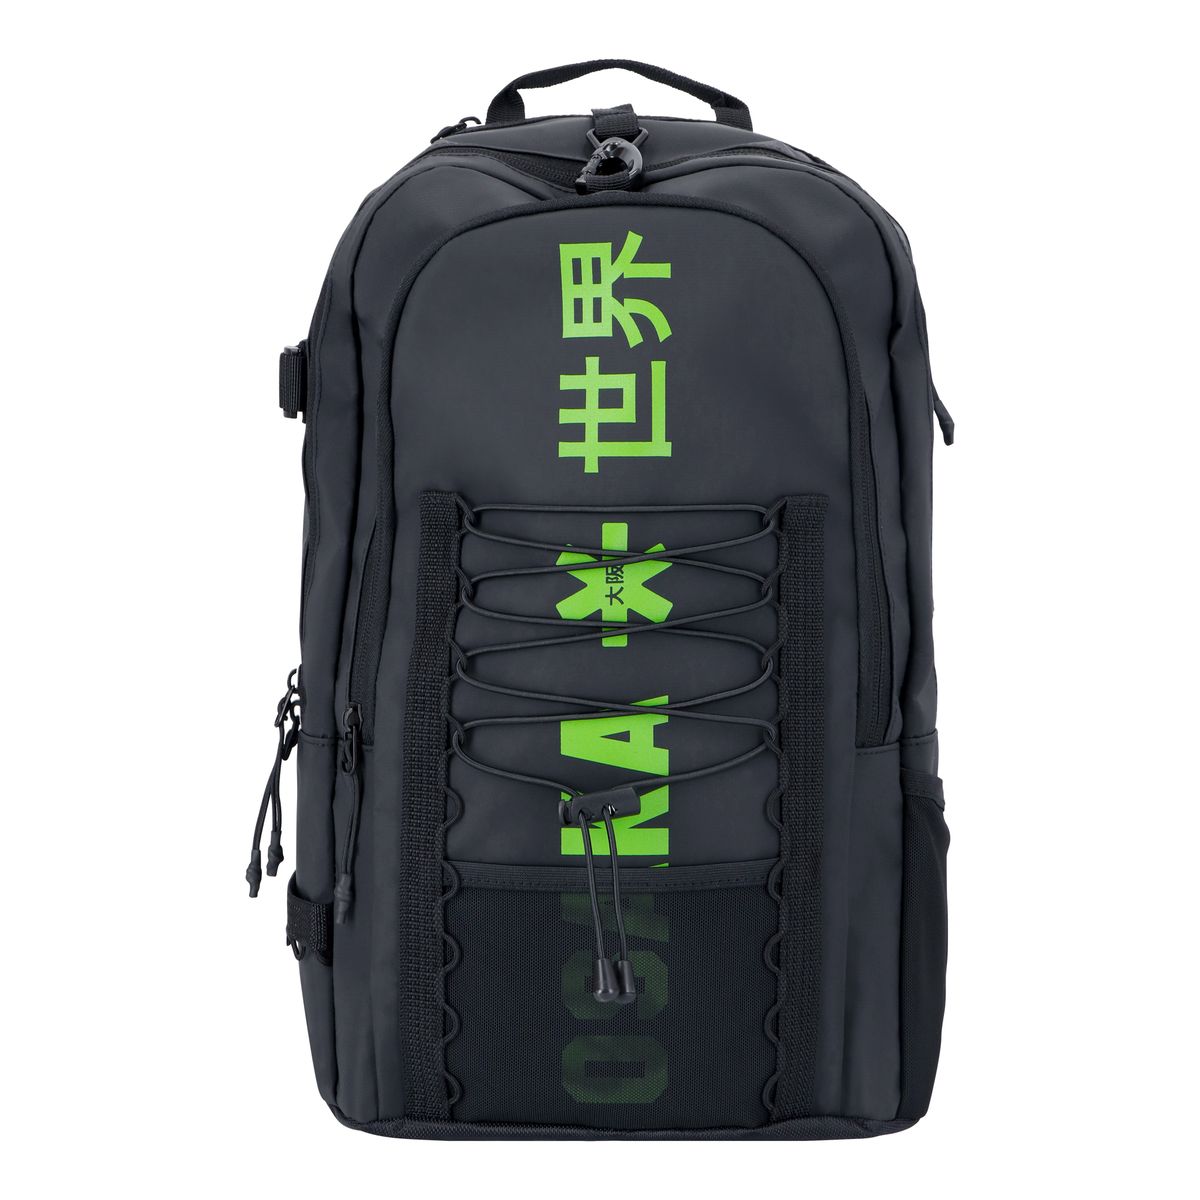 Osaka Pro Tour 2.0 Iconic Black Backpack | Shop Today. Get it Tomorrow ...